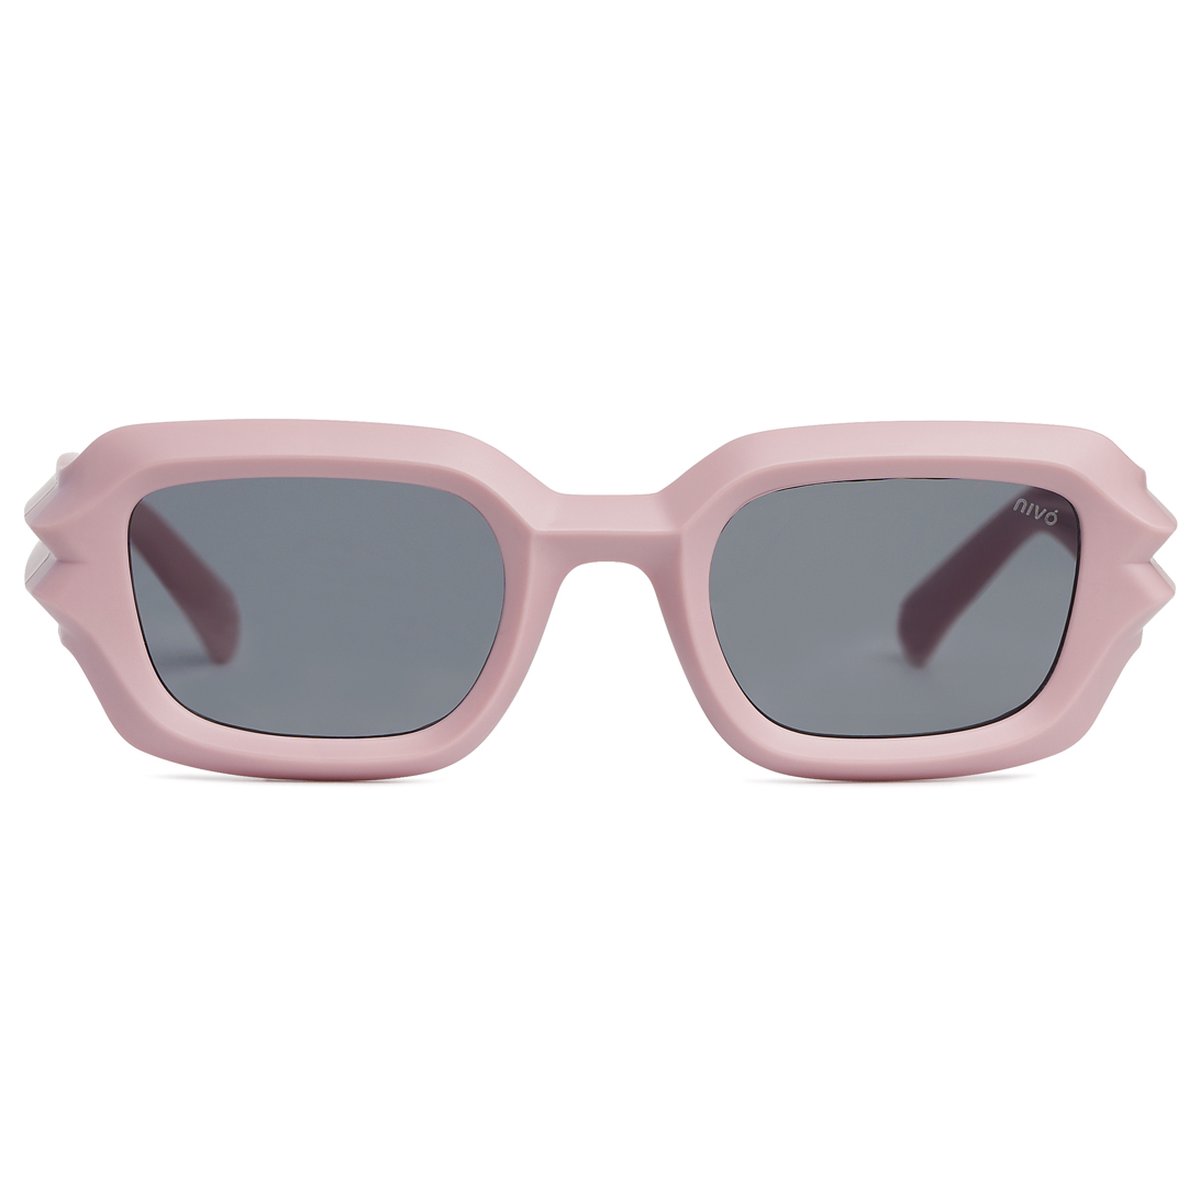 Nivó Zonnebril | Suki Pink – Roze Zonnebril Dames – Dames Zonnebril - Gepolariseerd - Festival Zonnebril - UV400 Filter - Gratis Luxe Brillenhoes